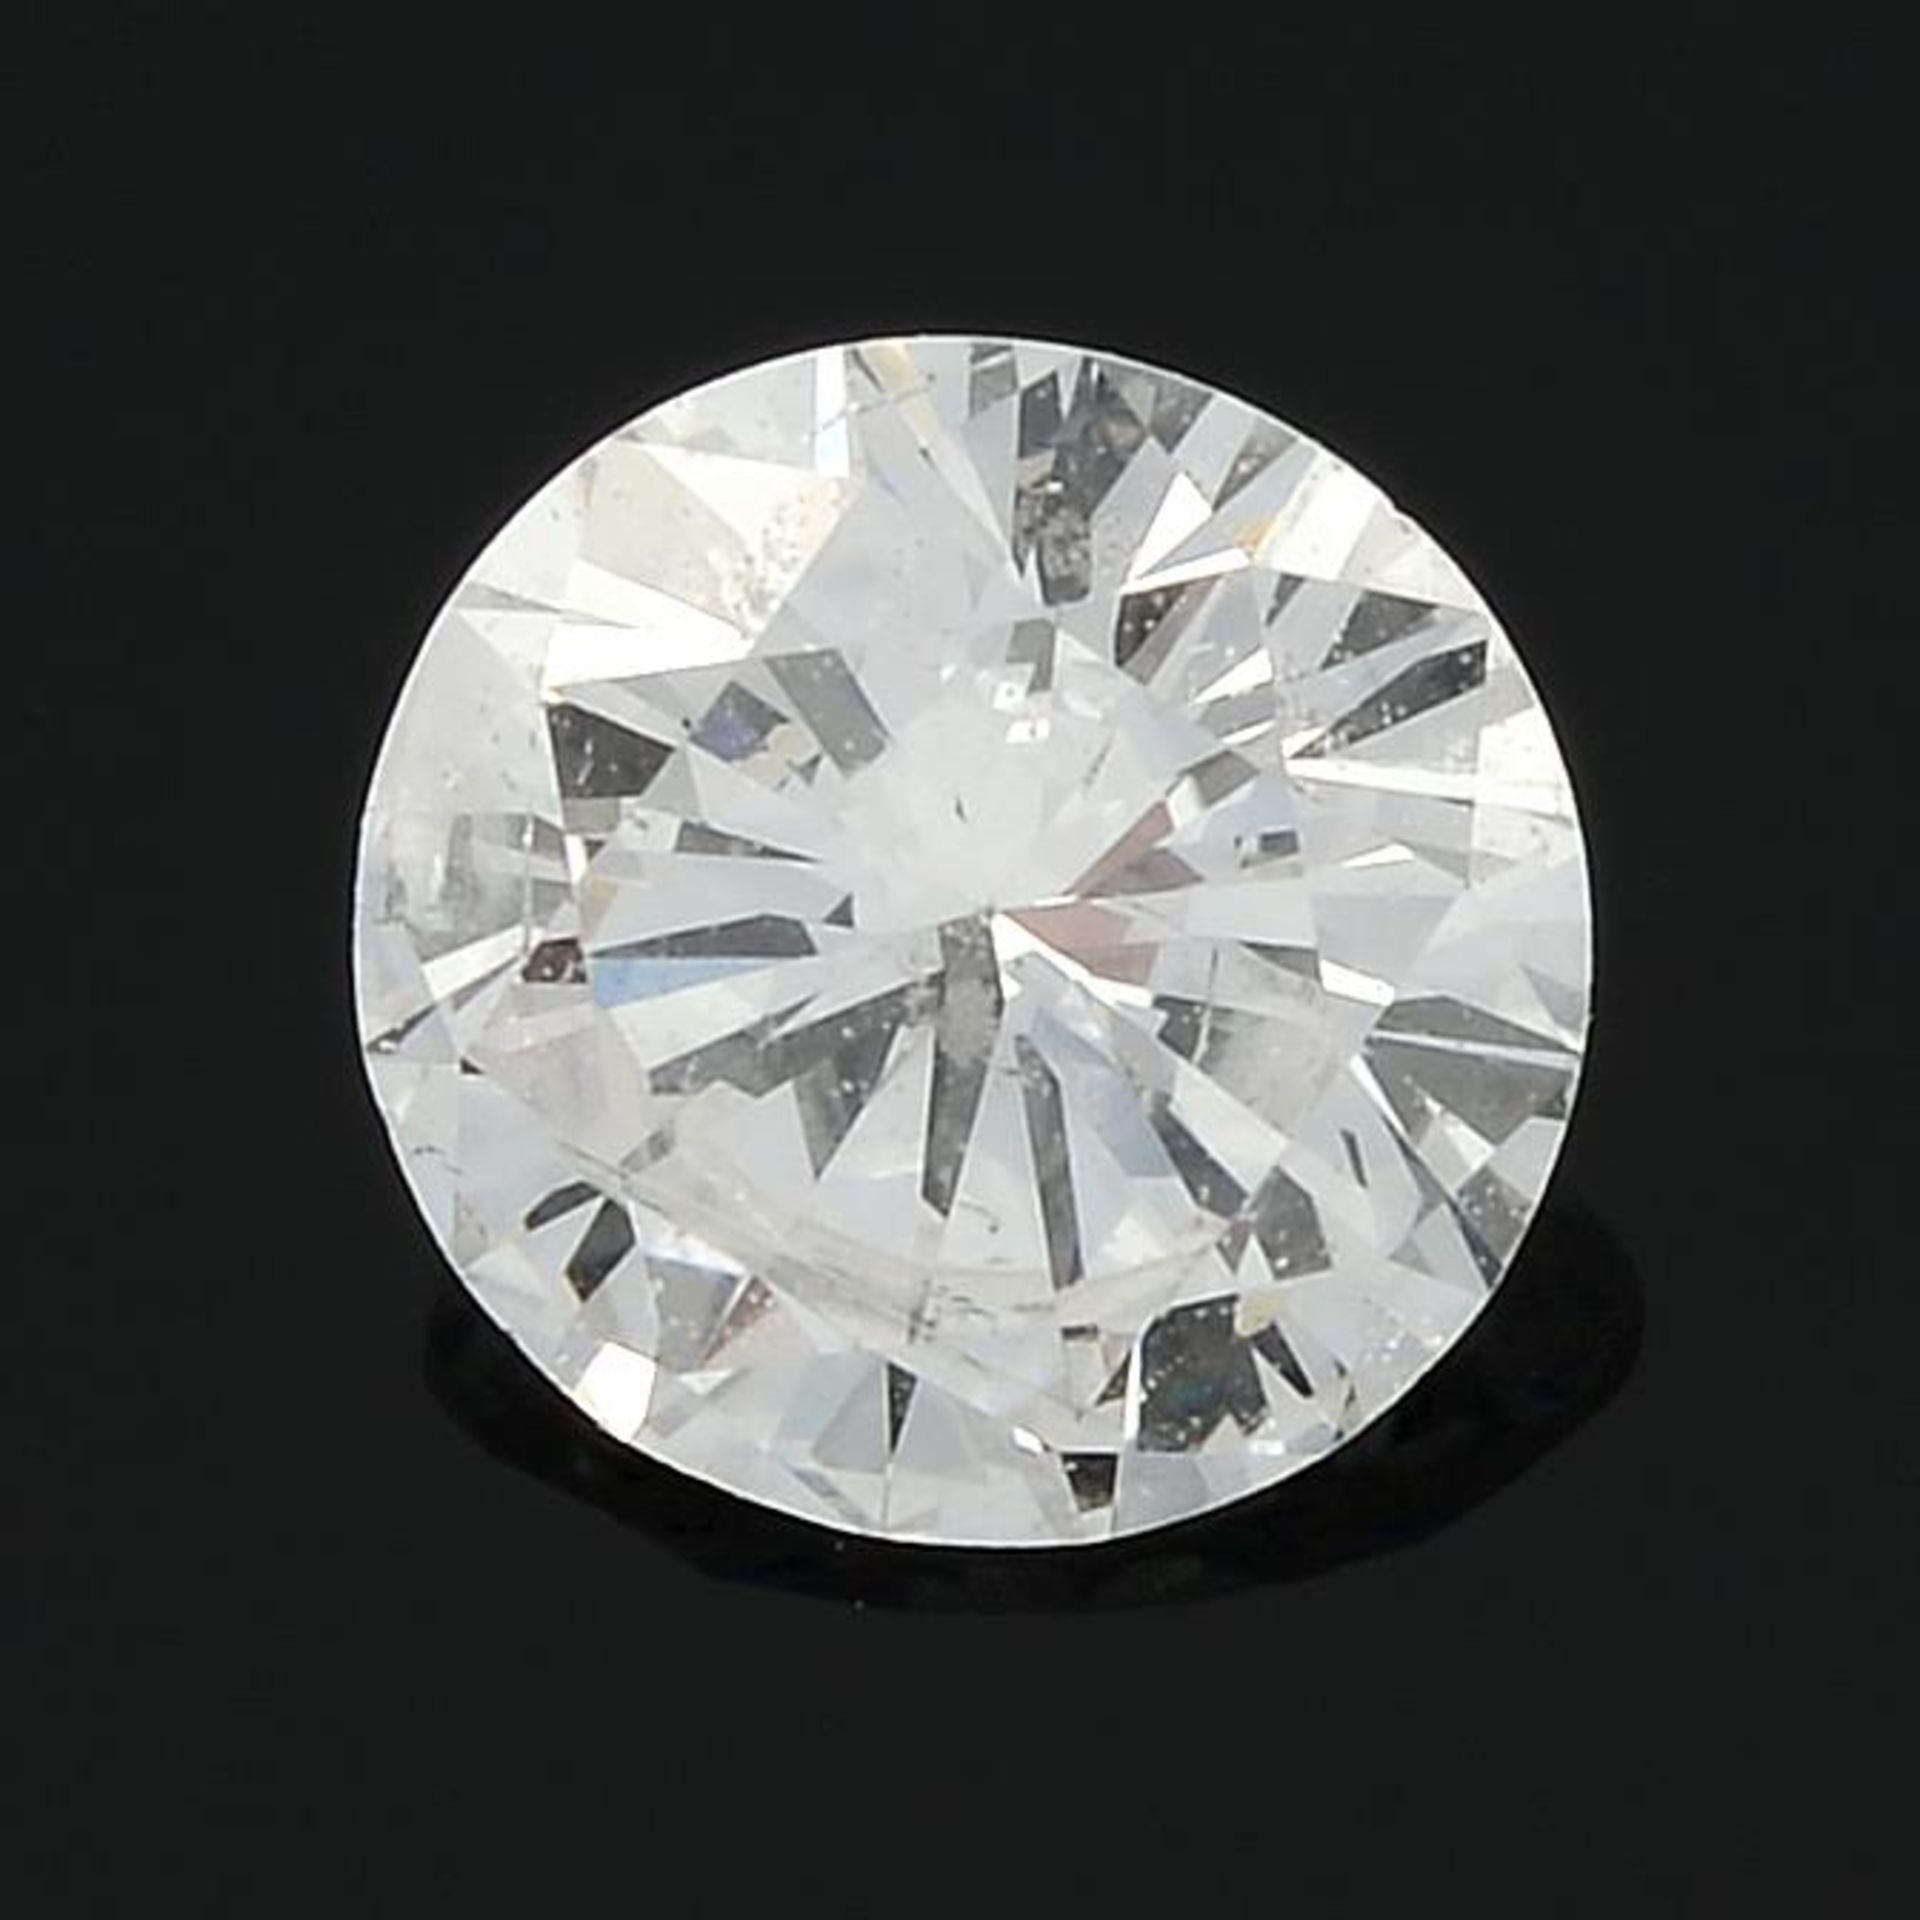 A brilliant-cut diamond, weighing 0.34ct.